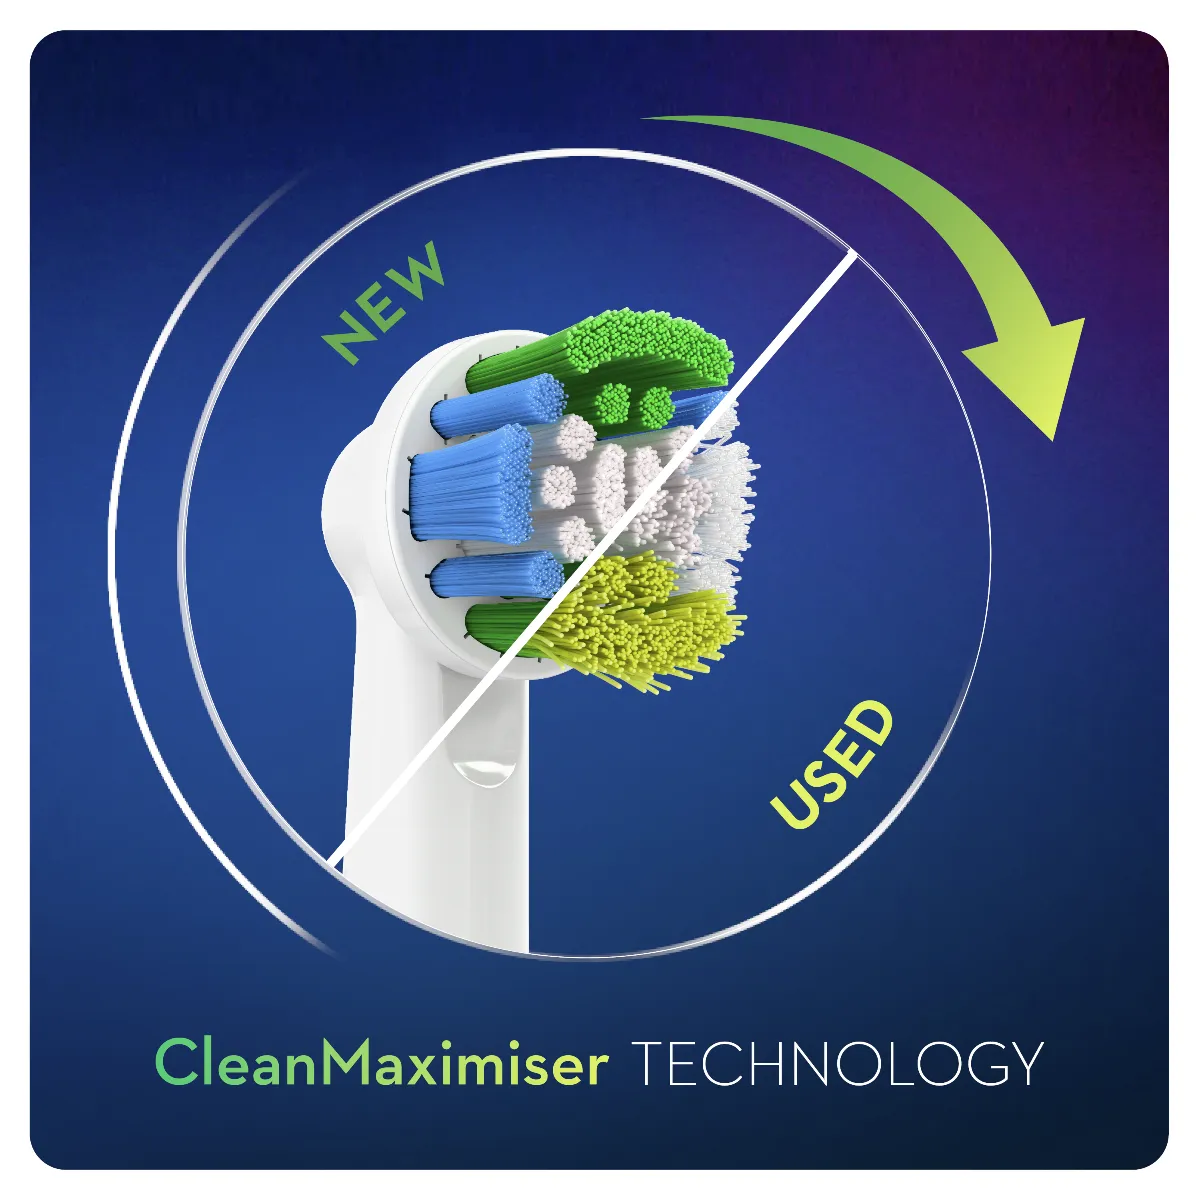 Oral-B EB 20-6 Precision clean náhradní hlavice s technologií CleanMaximiser 6 ks